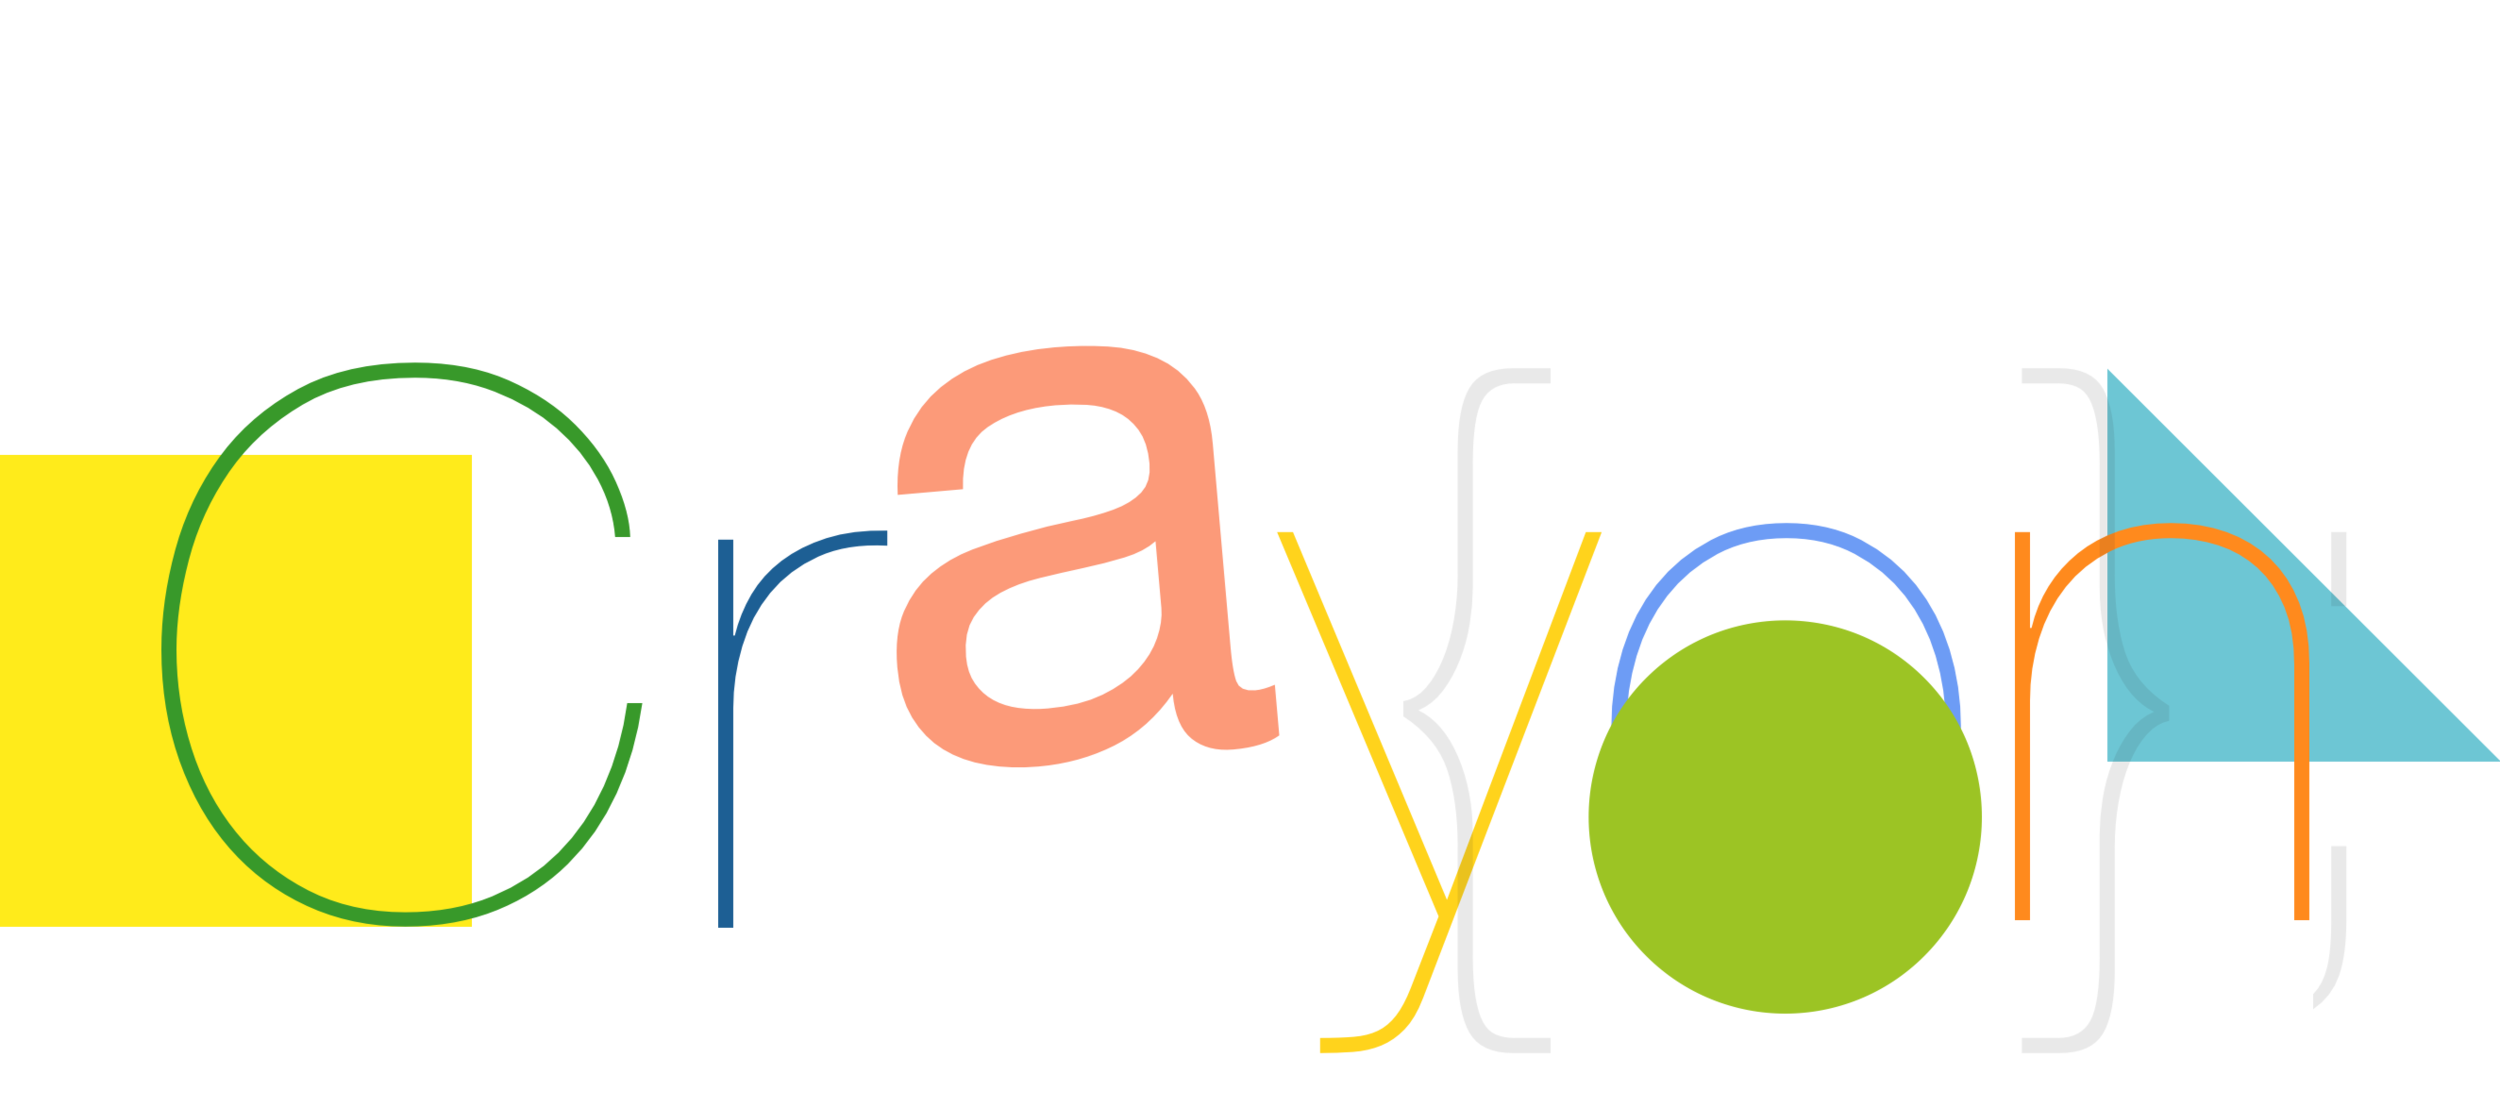 Crayon-logo.png